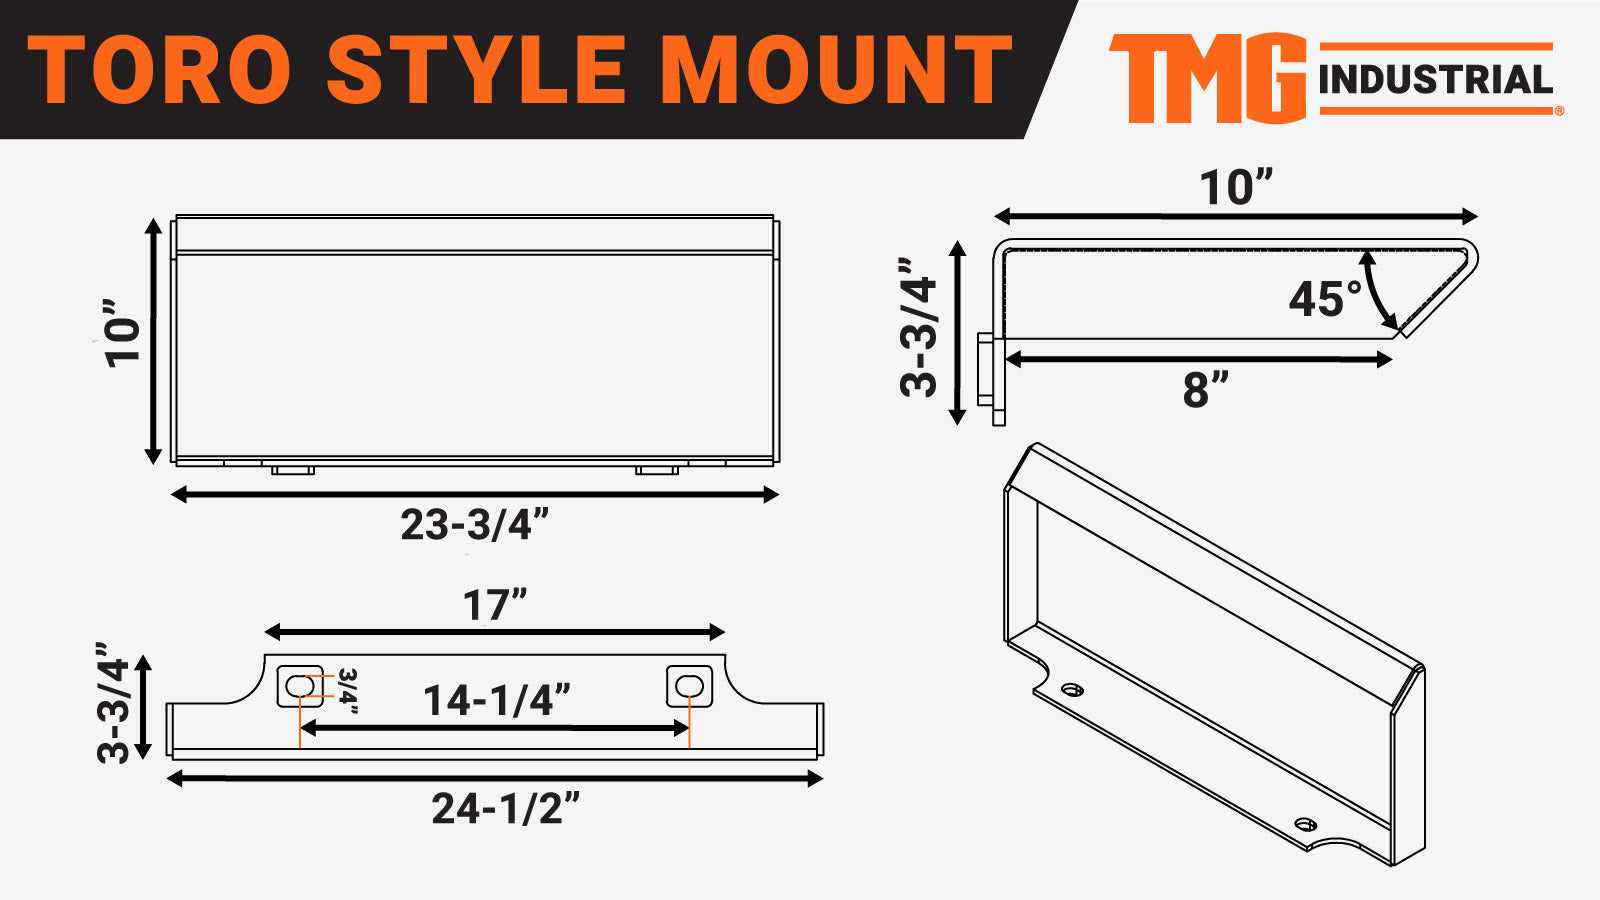 TMG Industrial 42” Mini Skid Steer Skeleton Grapple Attachment, Toro Style Mount, 24” Arm Opening, 2000 lb Weight Capacity, TMG-SG42-description-image